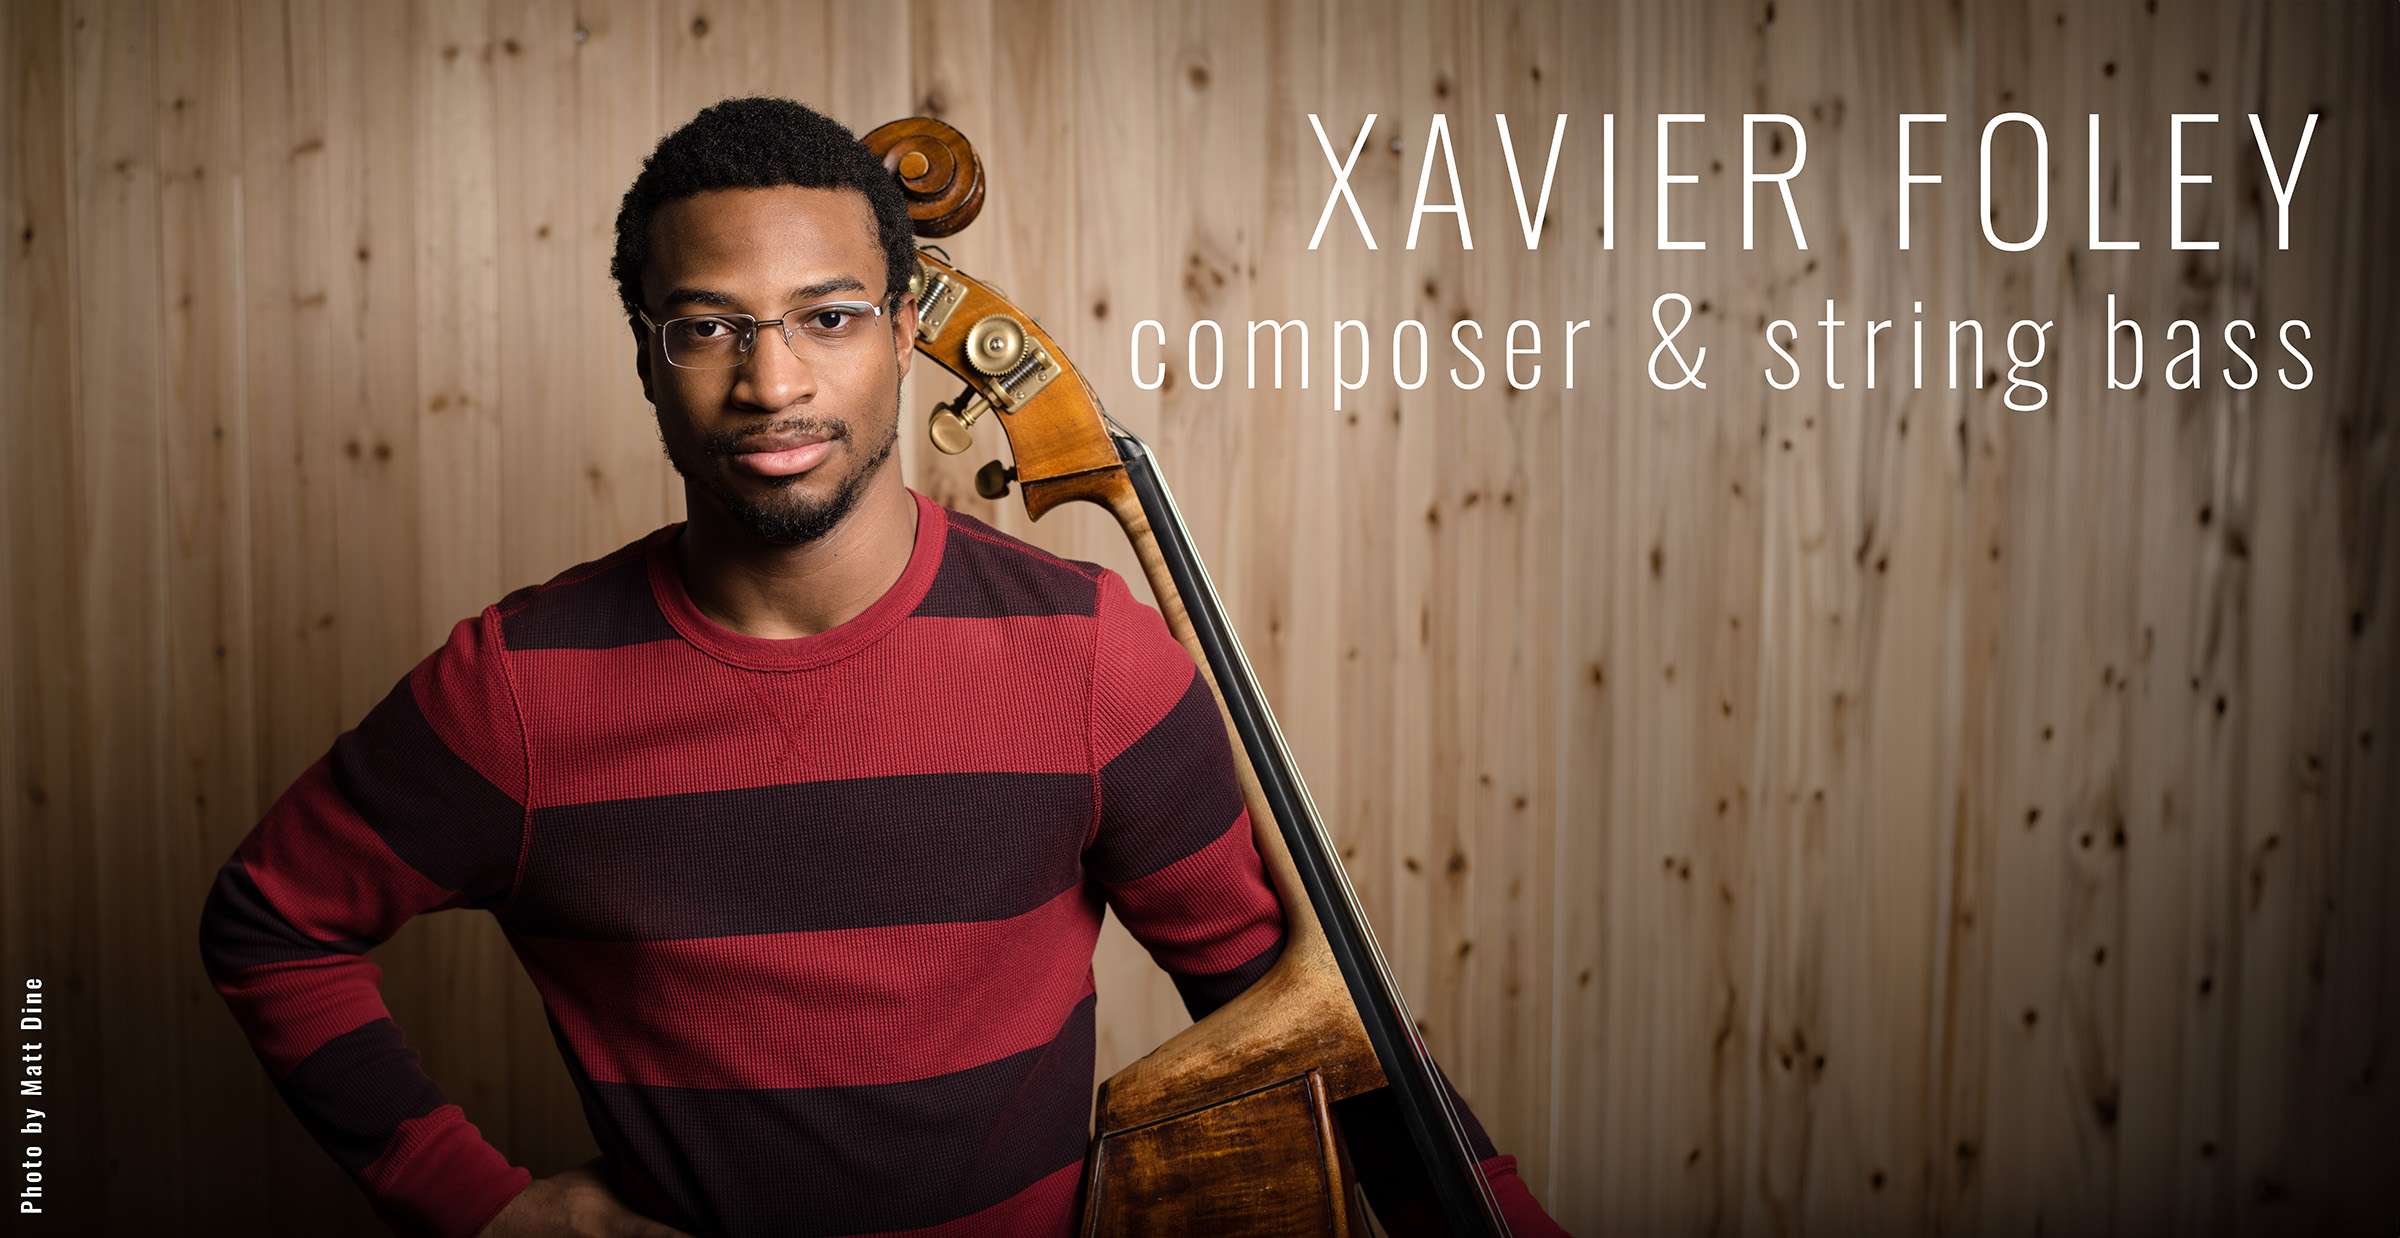 Xavier Foley, composer and string bass. Photo ©Matt Dine.